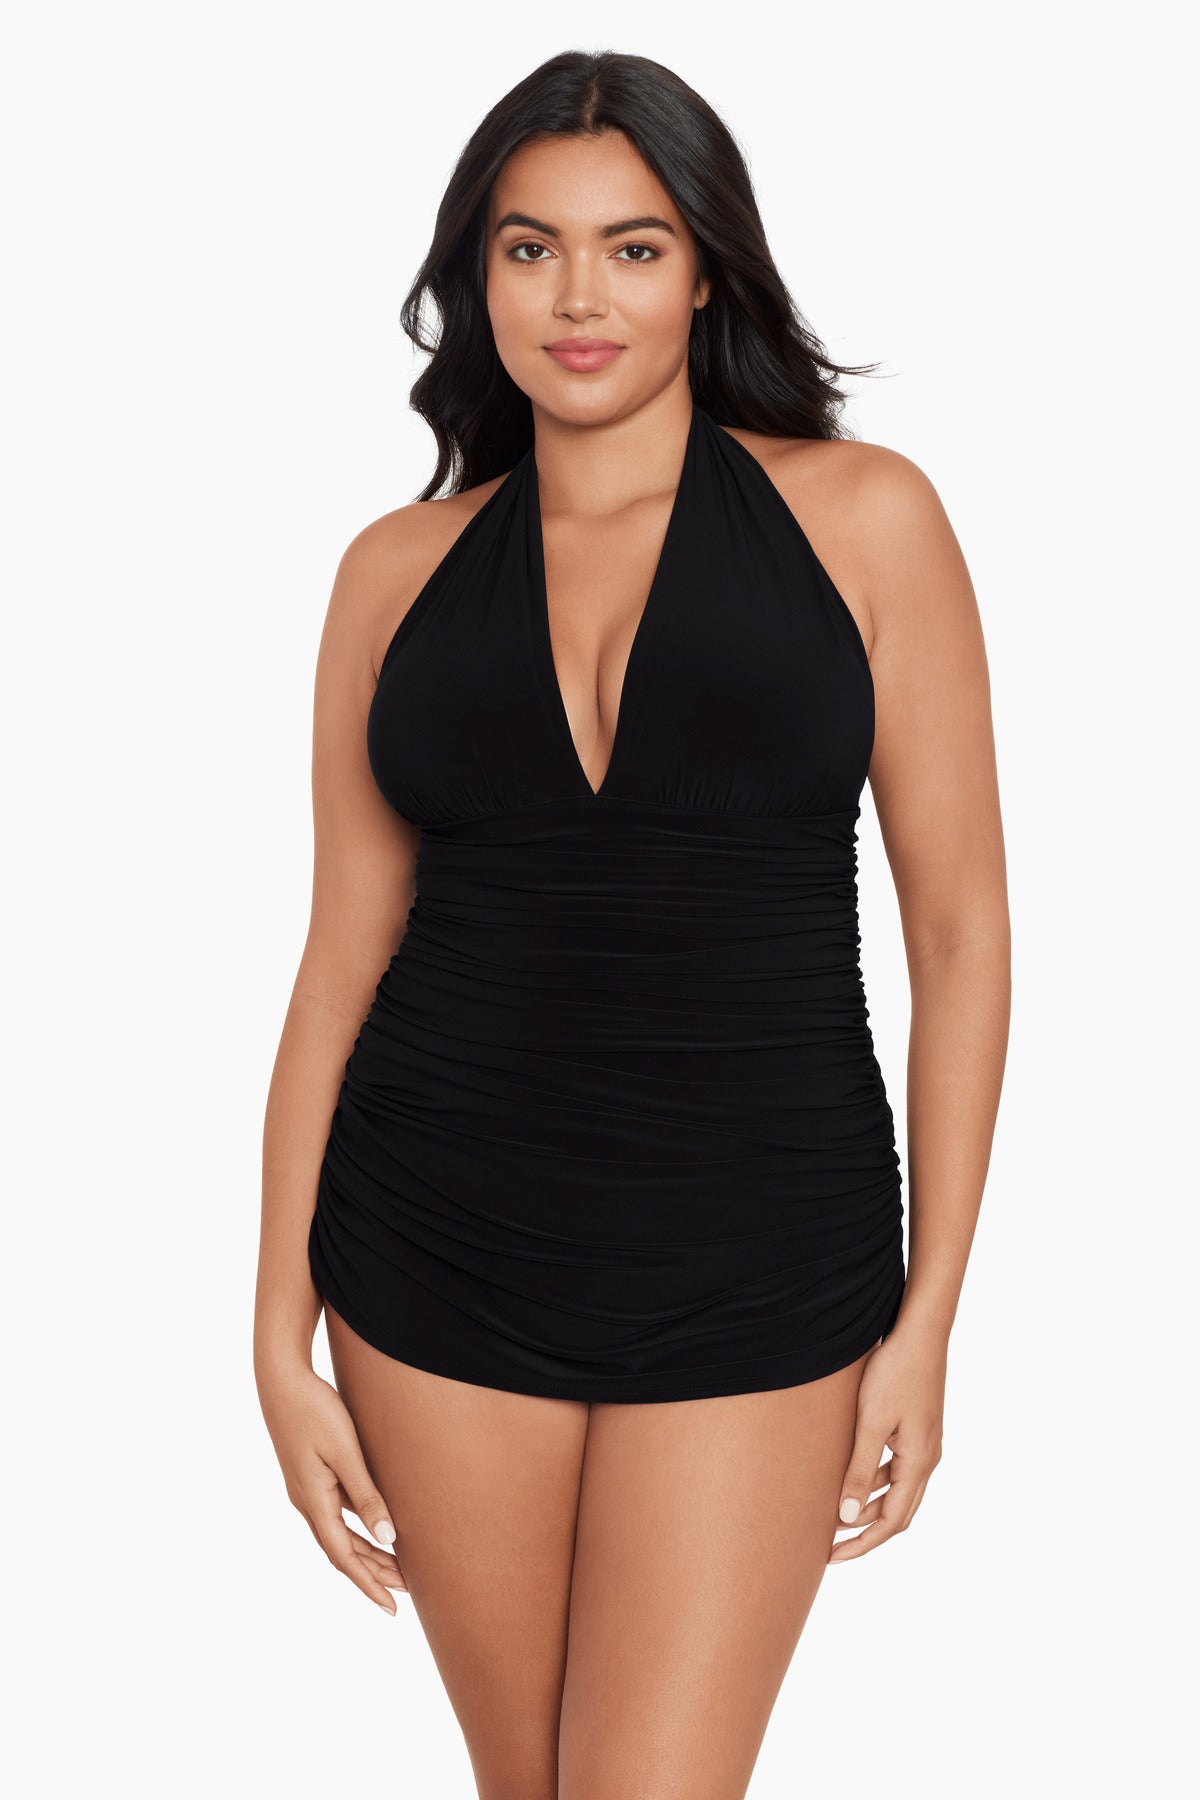 Elegant Black Sands | Shirt Dress Outfit For Women - Shop Now! - Nolabels.in